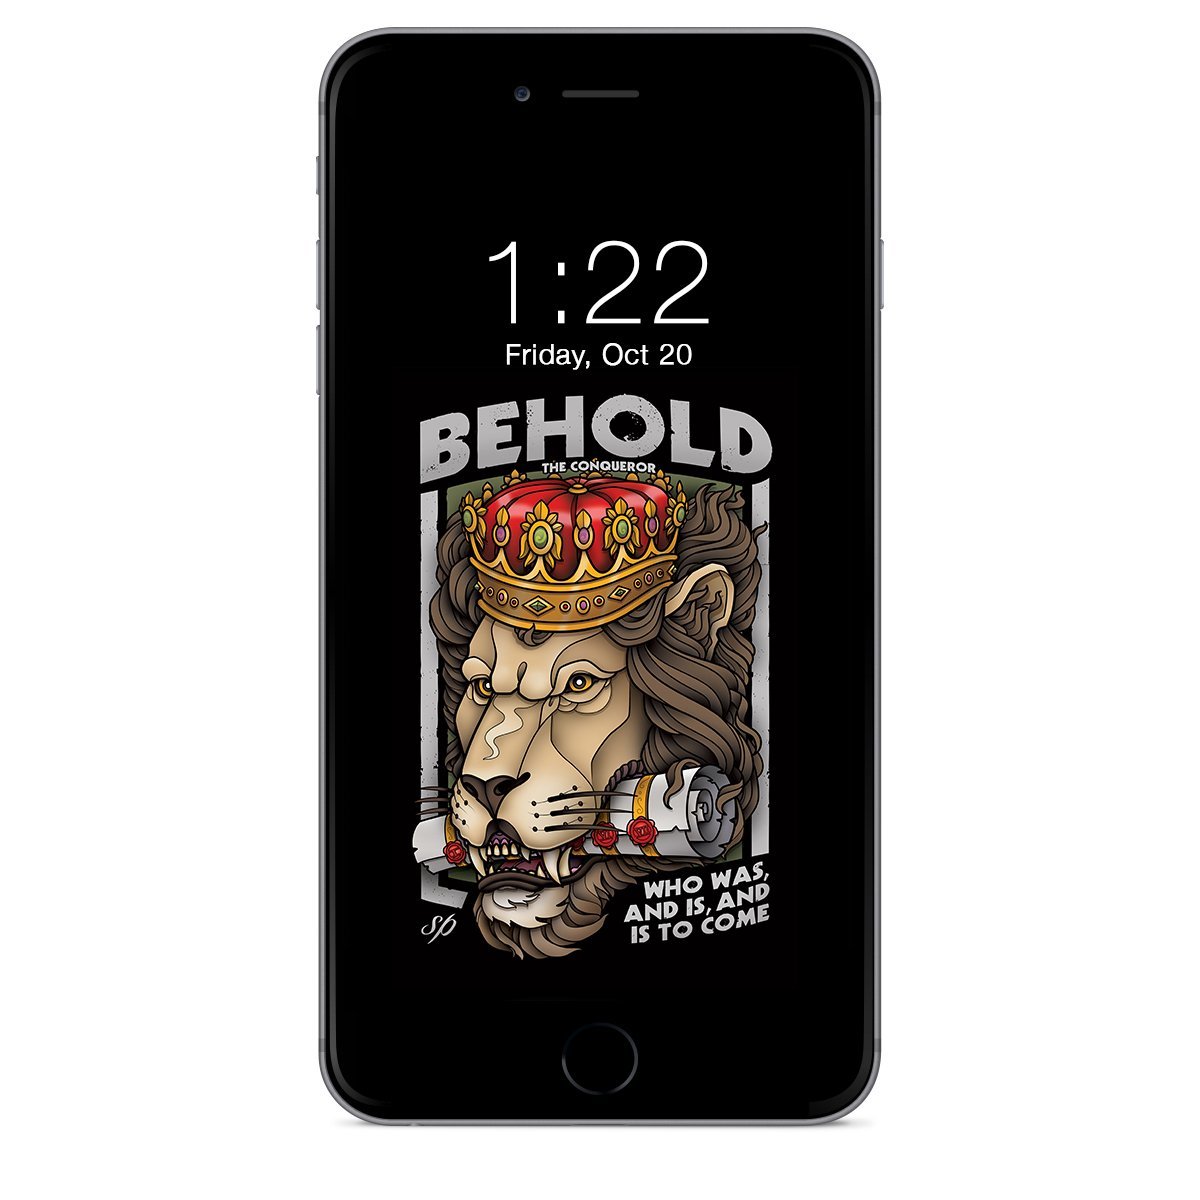 CXXII x Sam Phillips "Behold Lion" iPhone Wallpaper